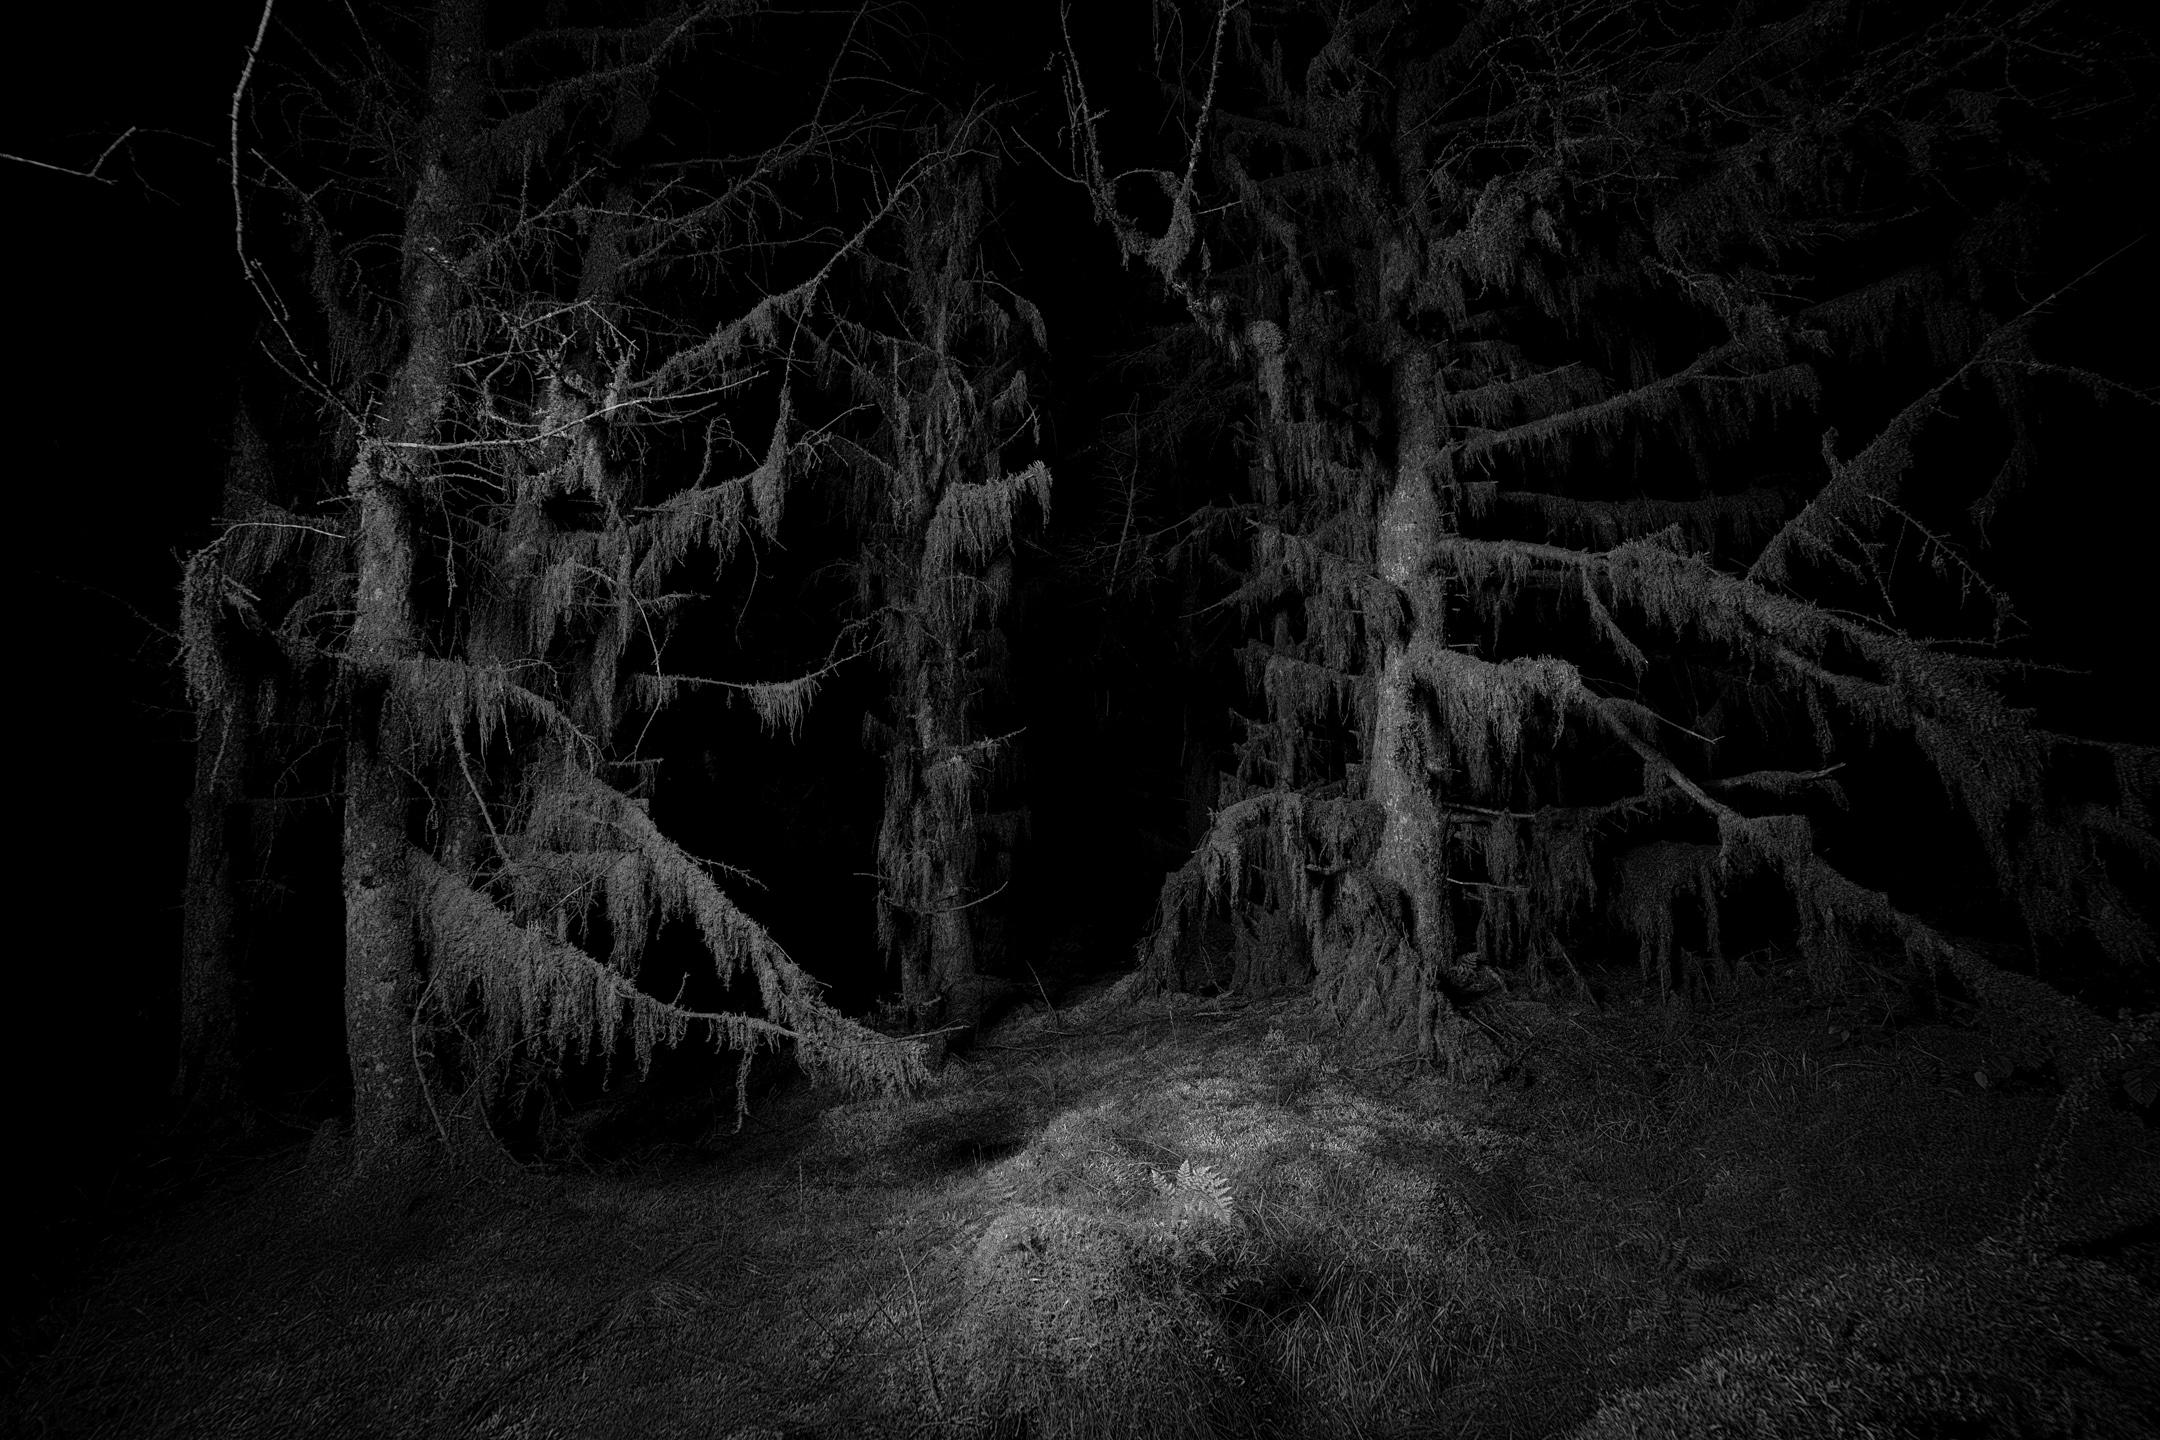 Jasper Goodall Landscape Art - Twilight's #09 - Witches Sabbath - Black and white print of fir trees